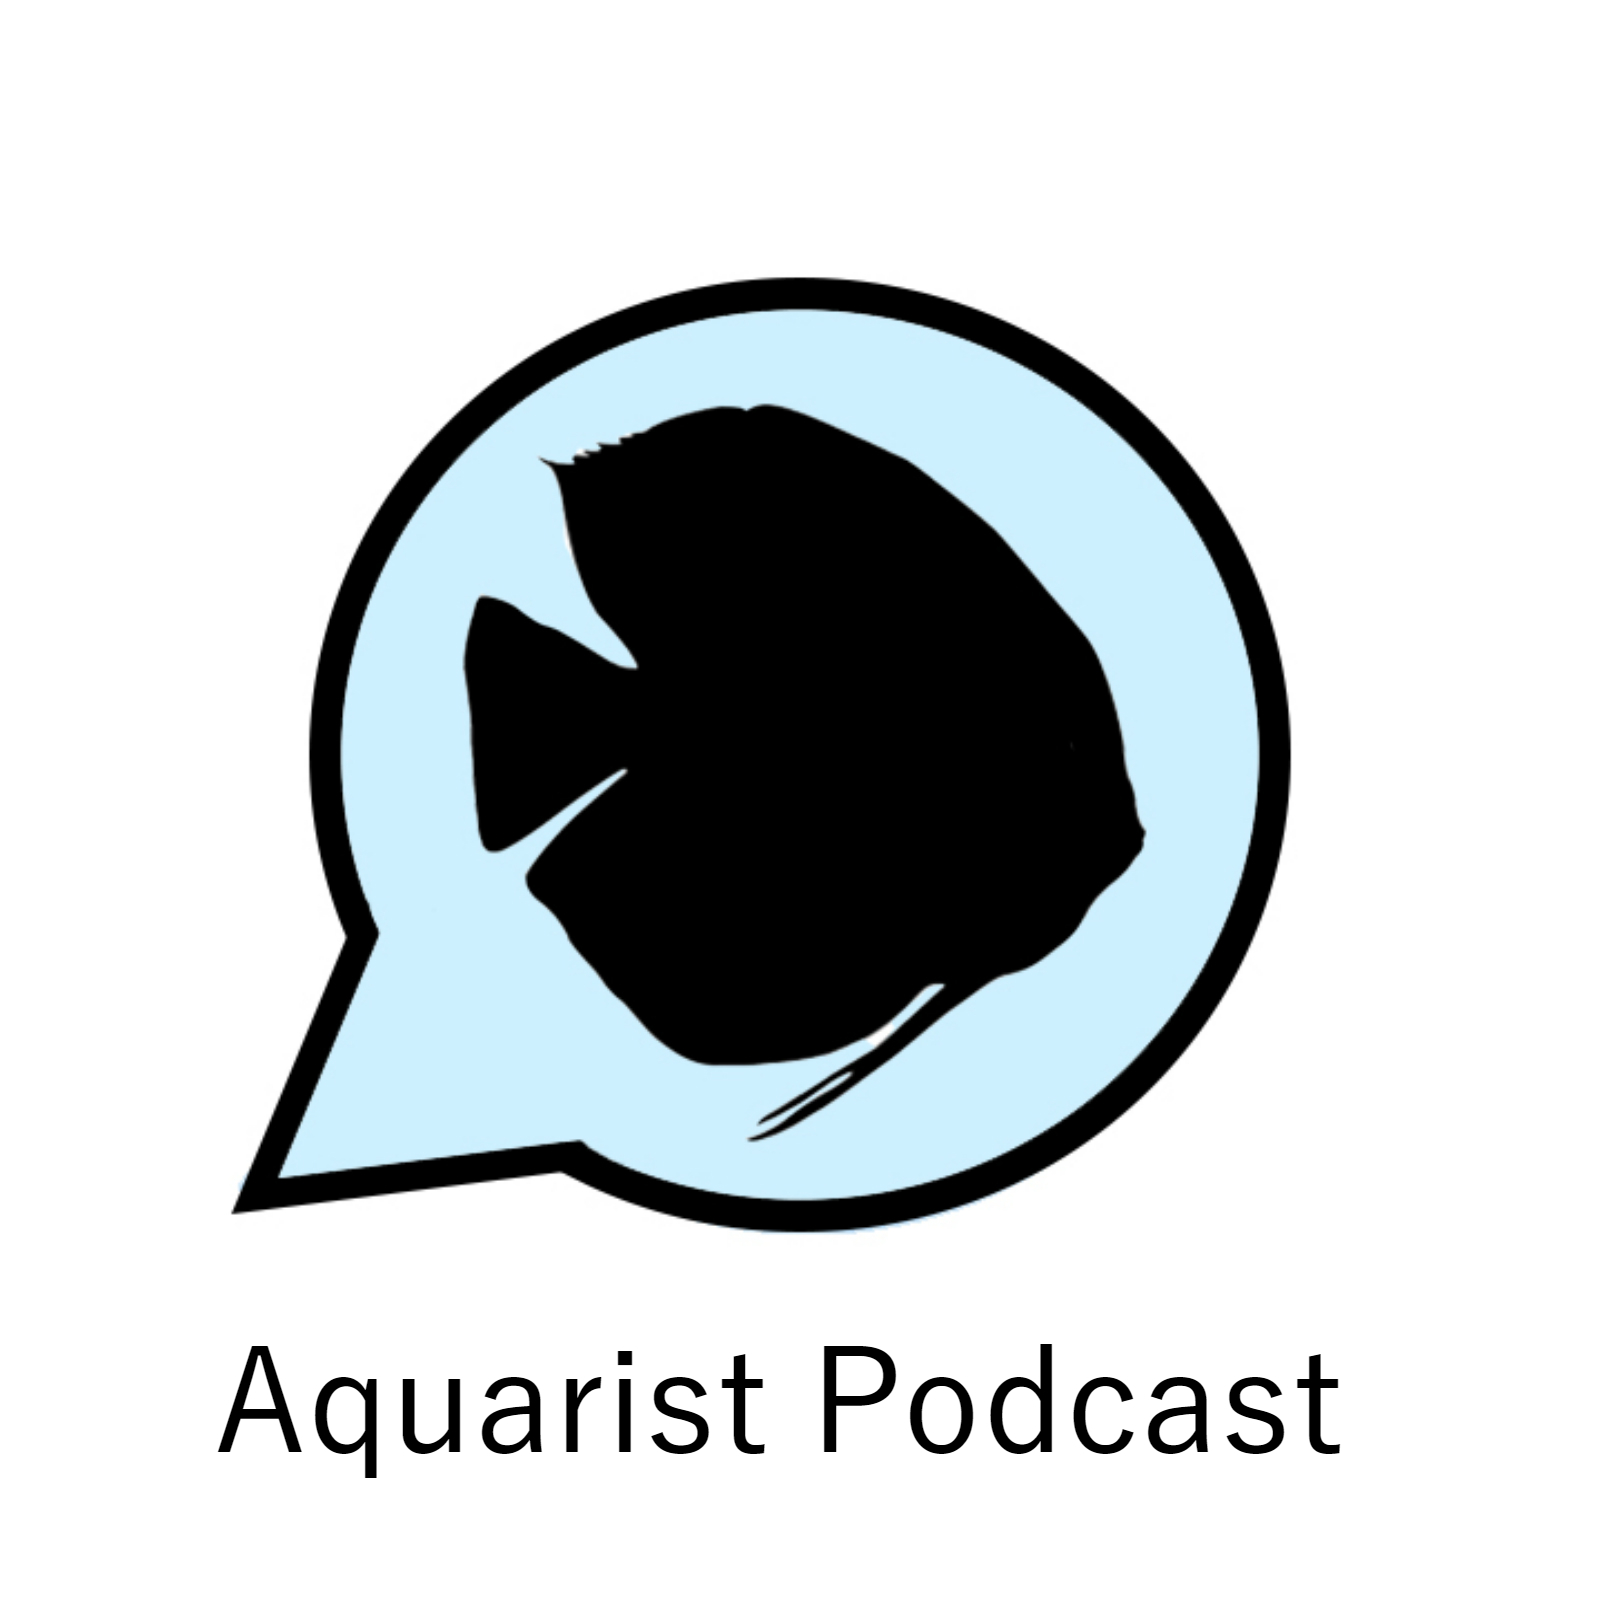 The Aquarist Podcast